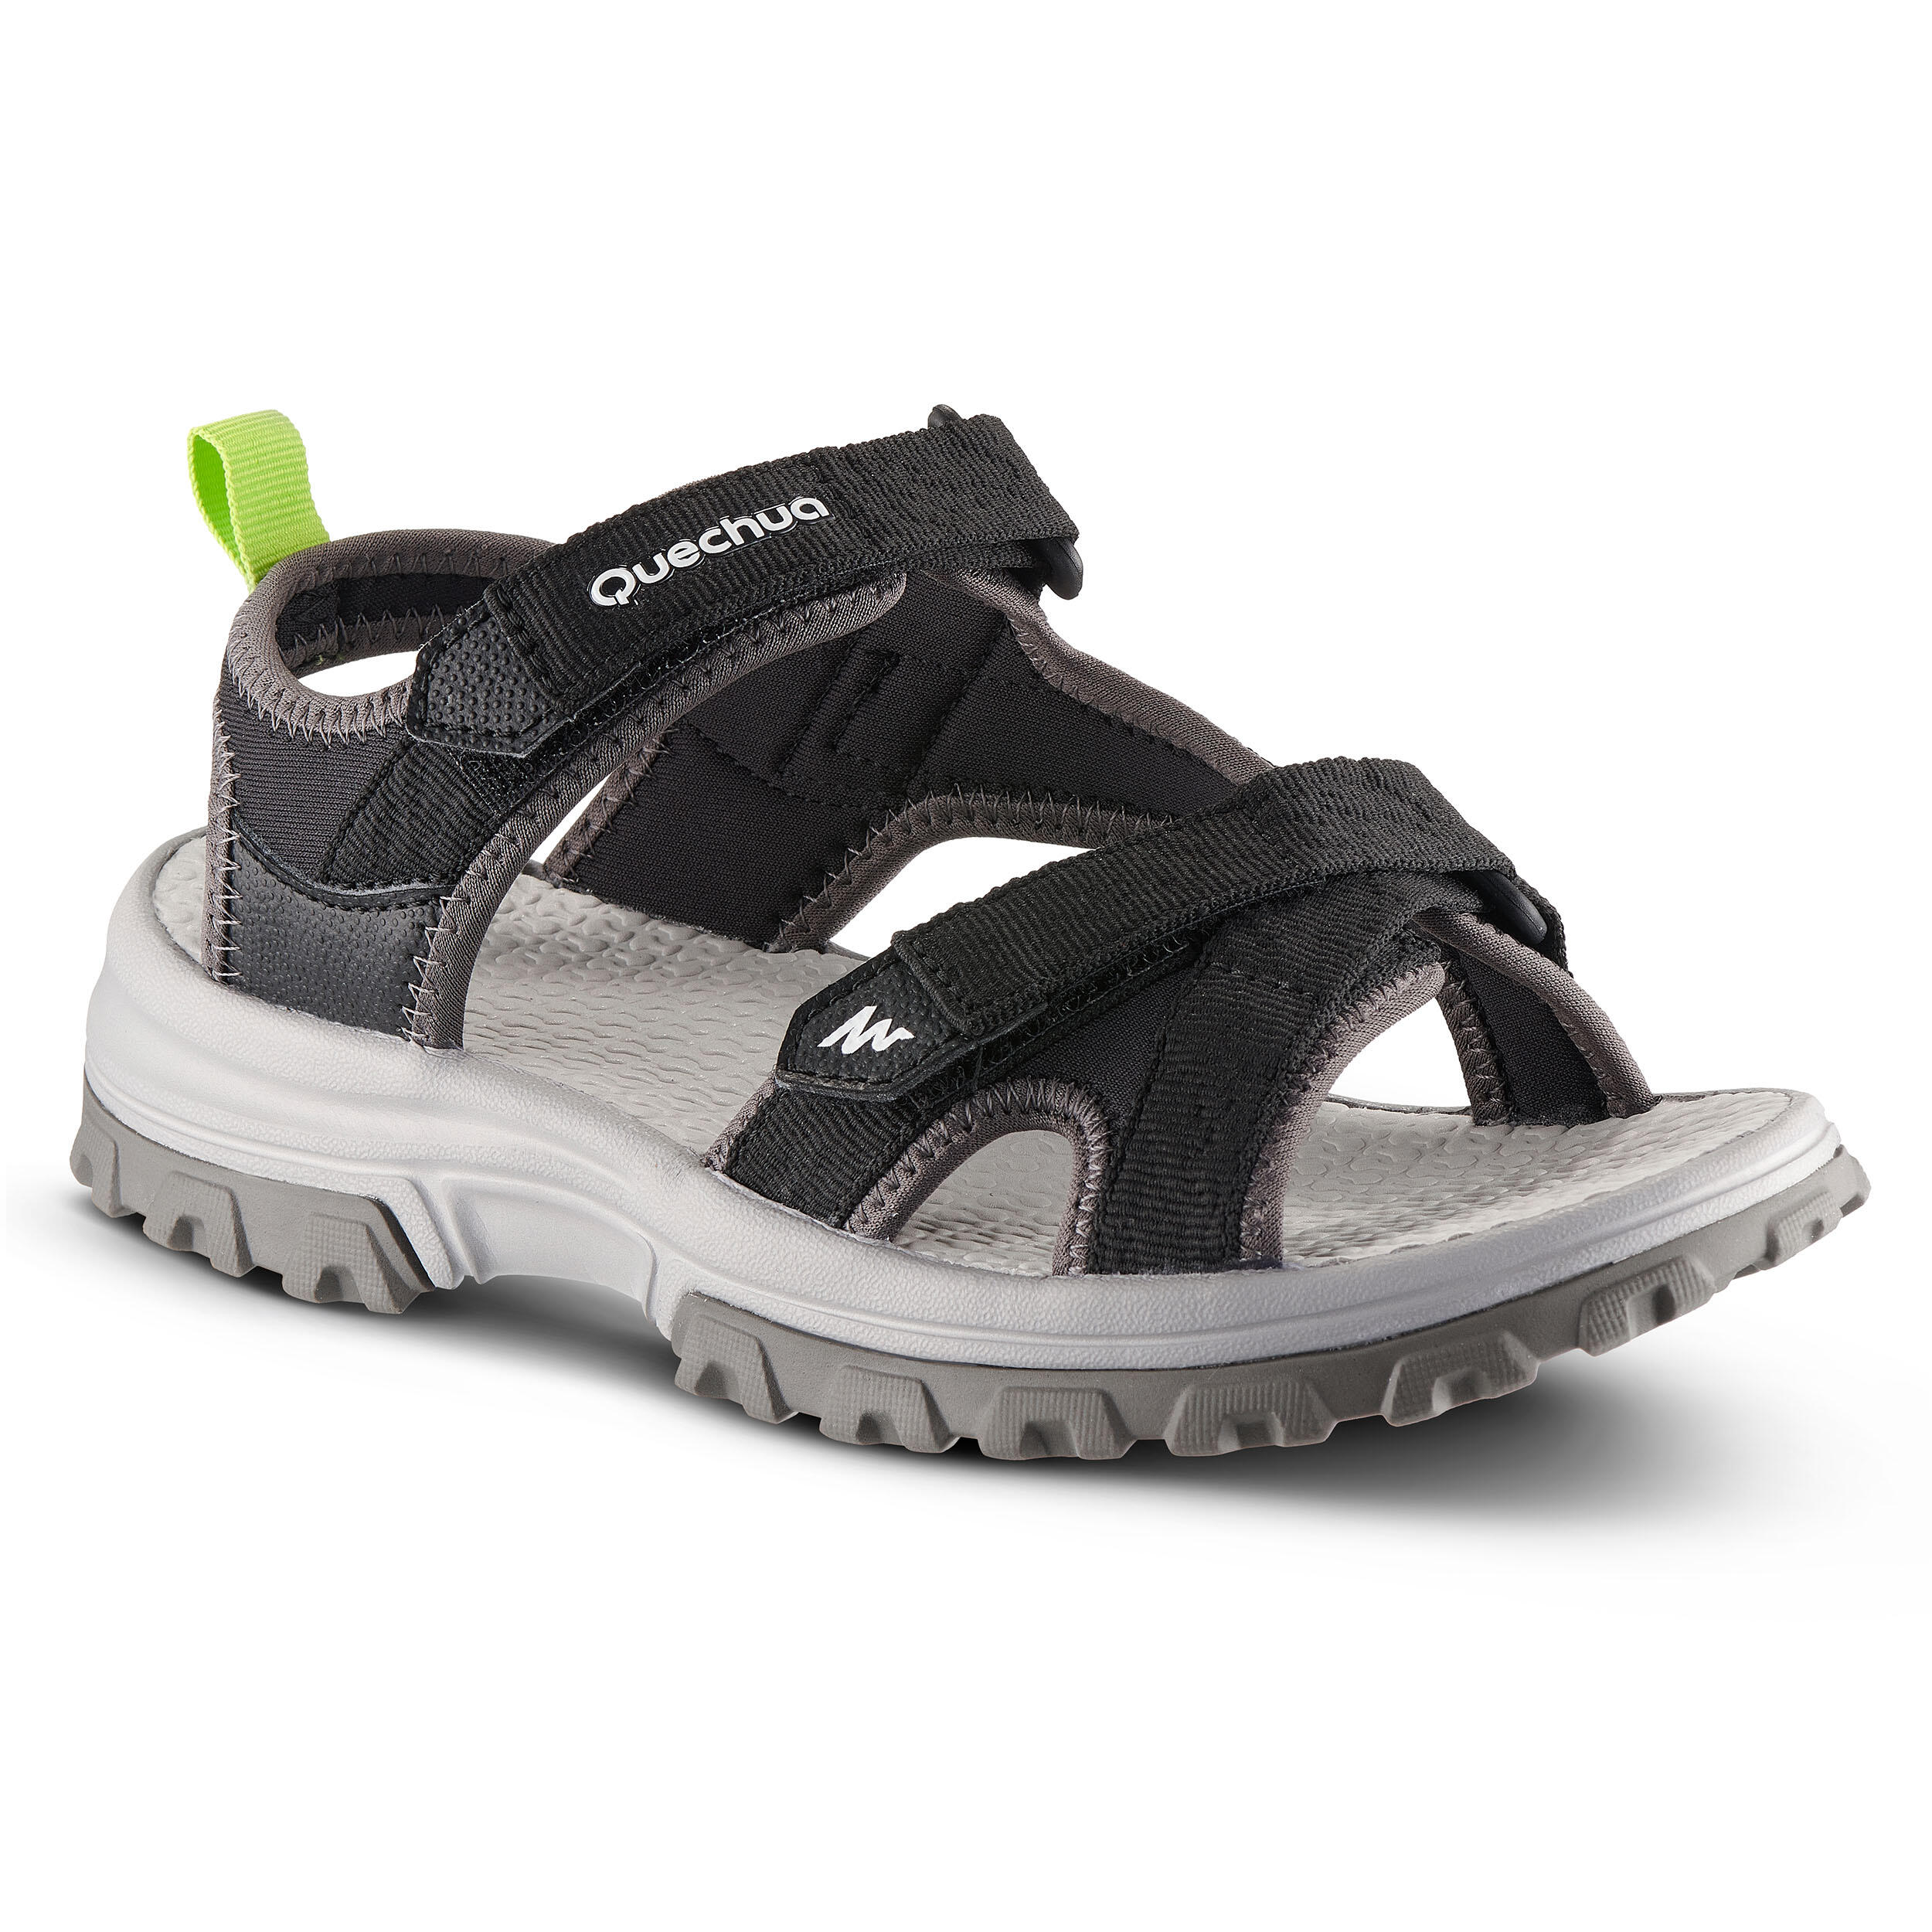 Decathlon Women's Sandals Guaranteed Authentic | ekosplay.com